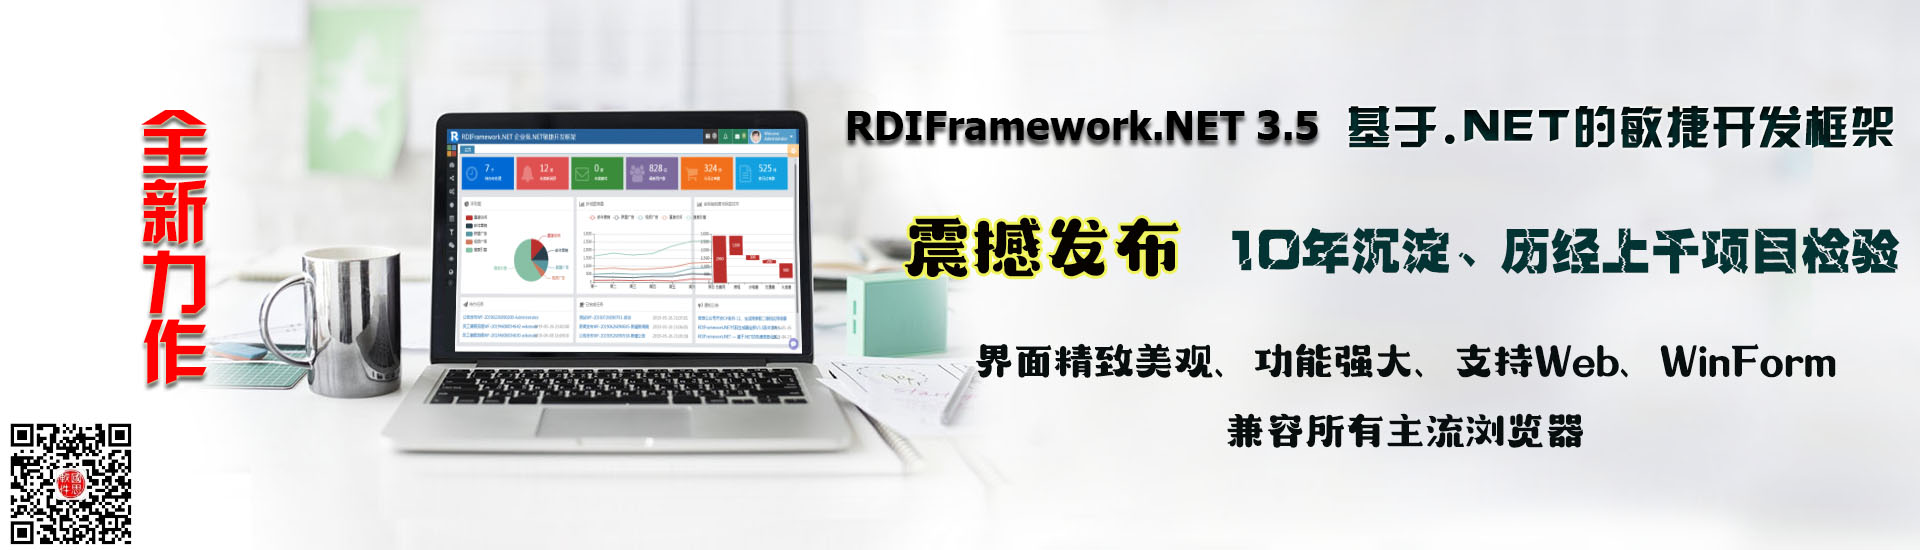 RDIFramework.NET ━ .NET敏捷开发框架全新发布 V3.5版本 